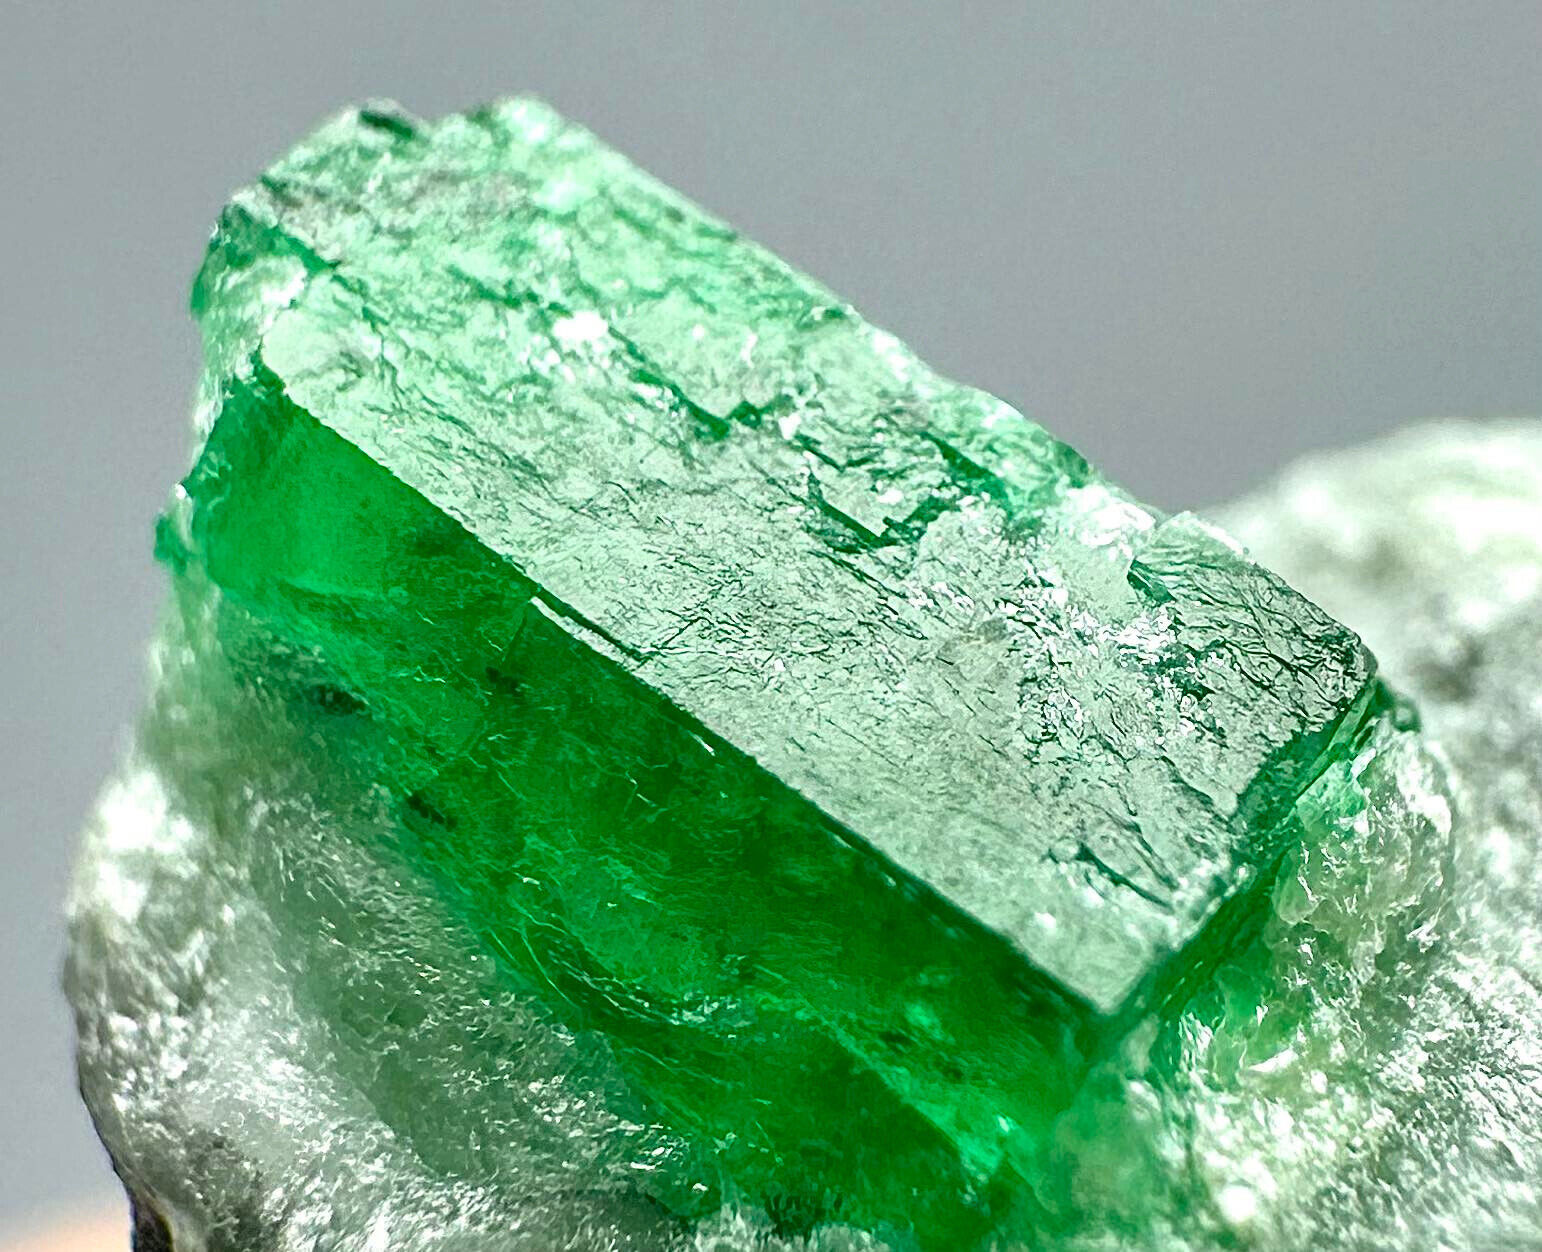 43 Carat Top Quality Green Emerald Crystal On Matrix From Swat Pakistan